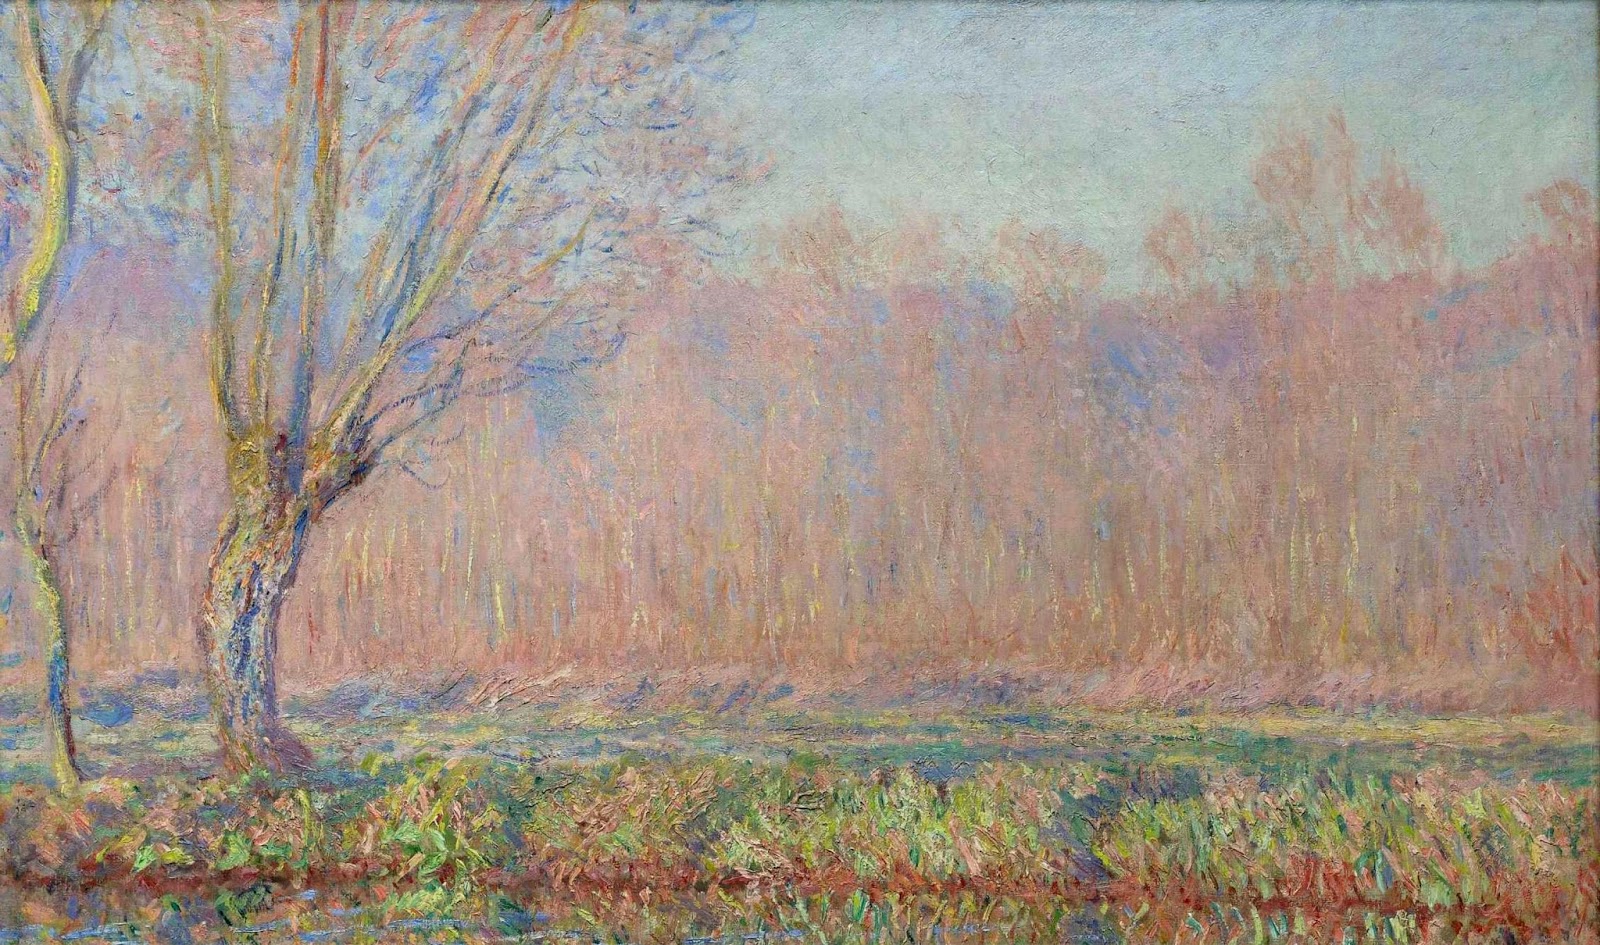 Claude+Monet-1840-1926 (839).jpg